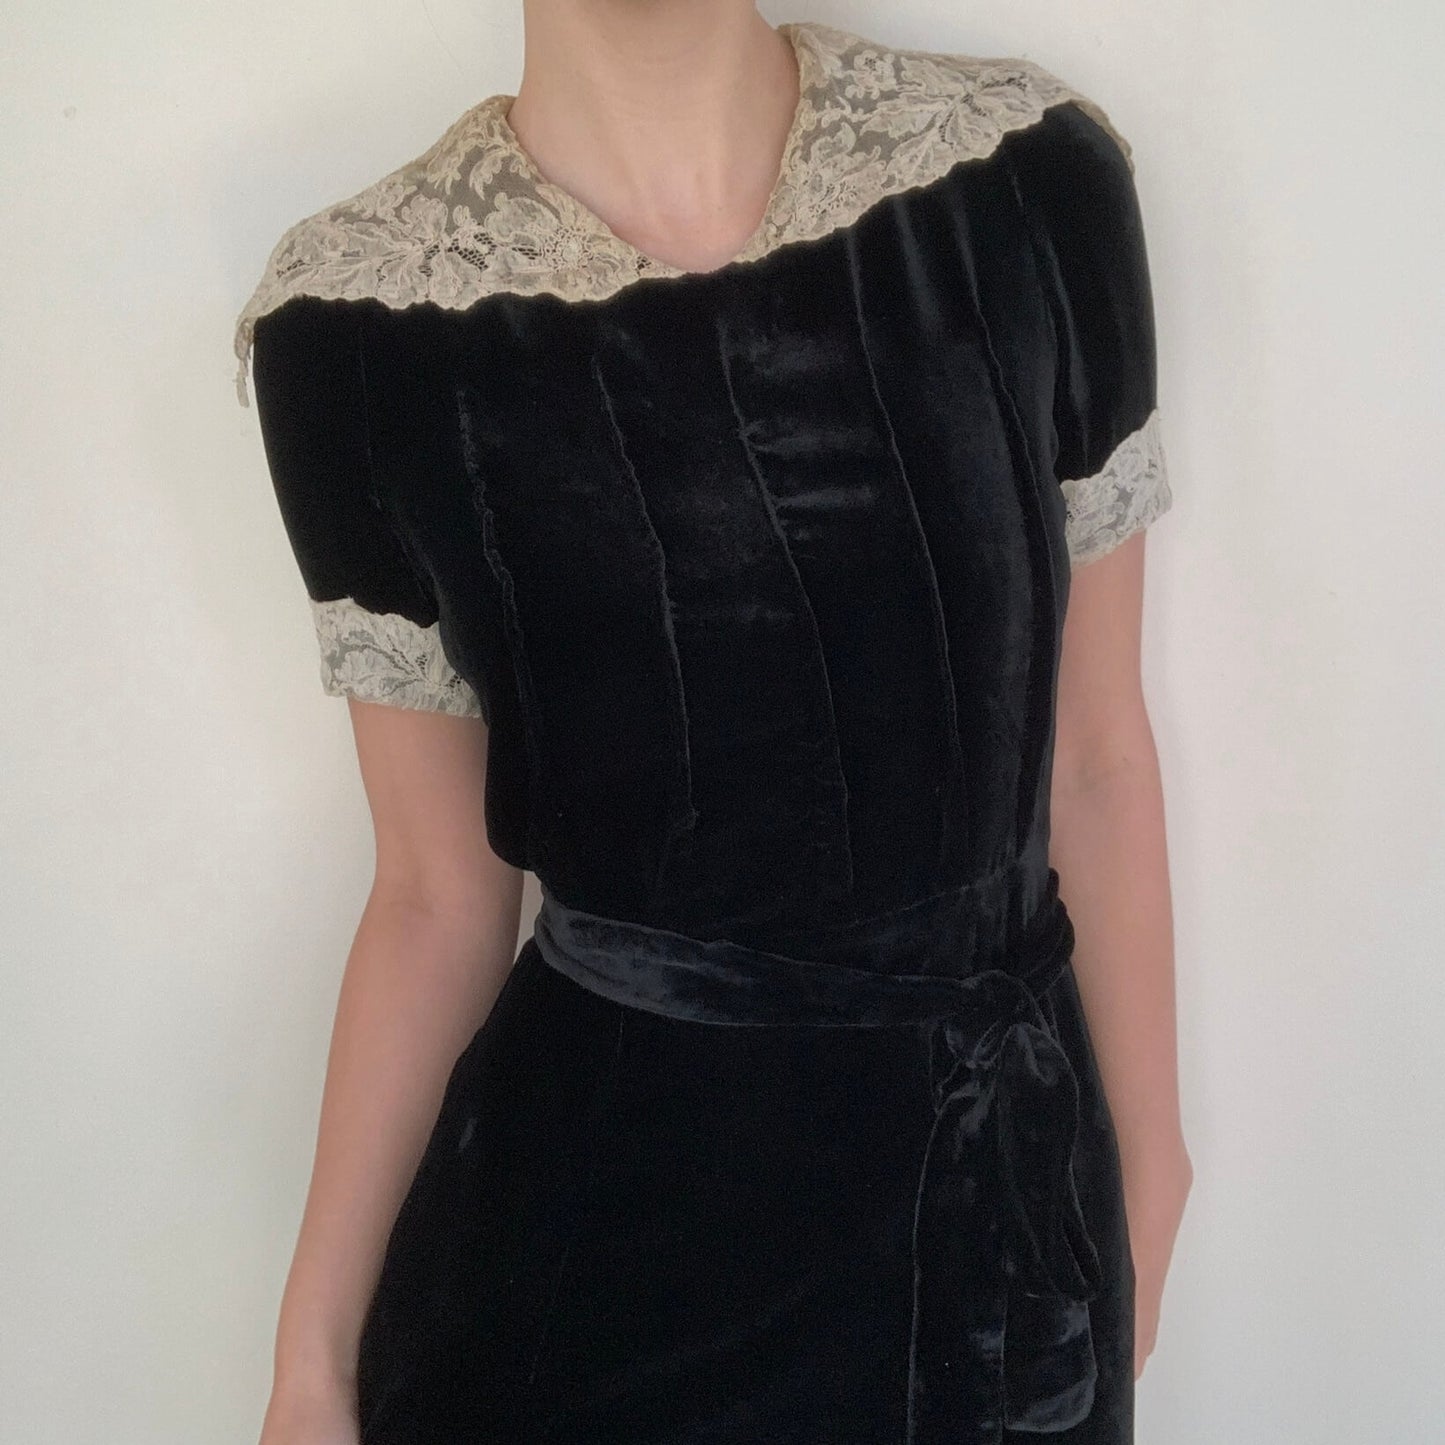 Black vintage 1930s velvet dress with ivory alencon lace collar